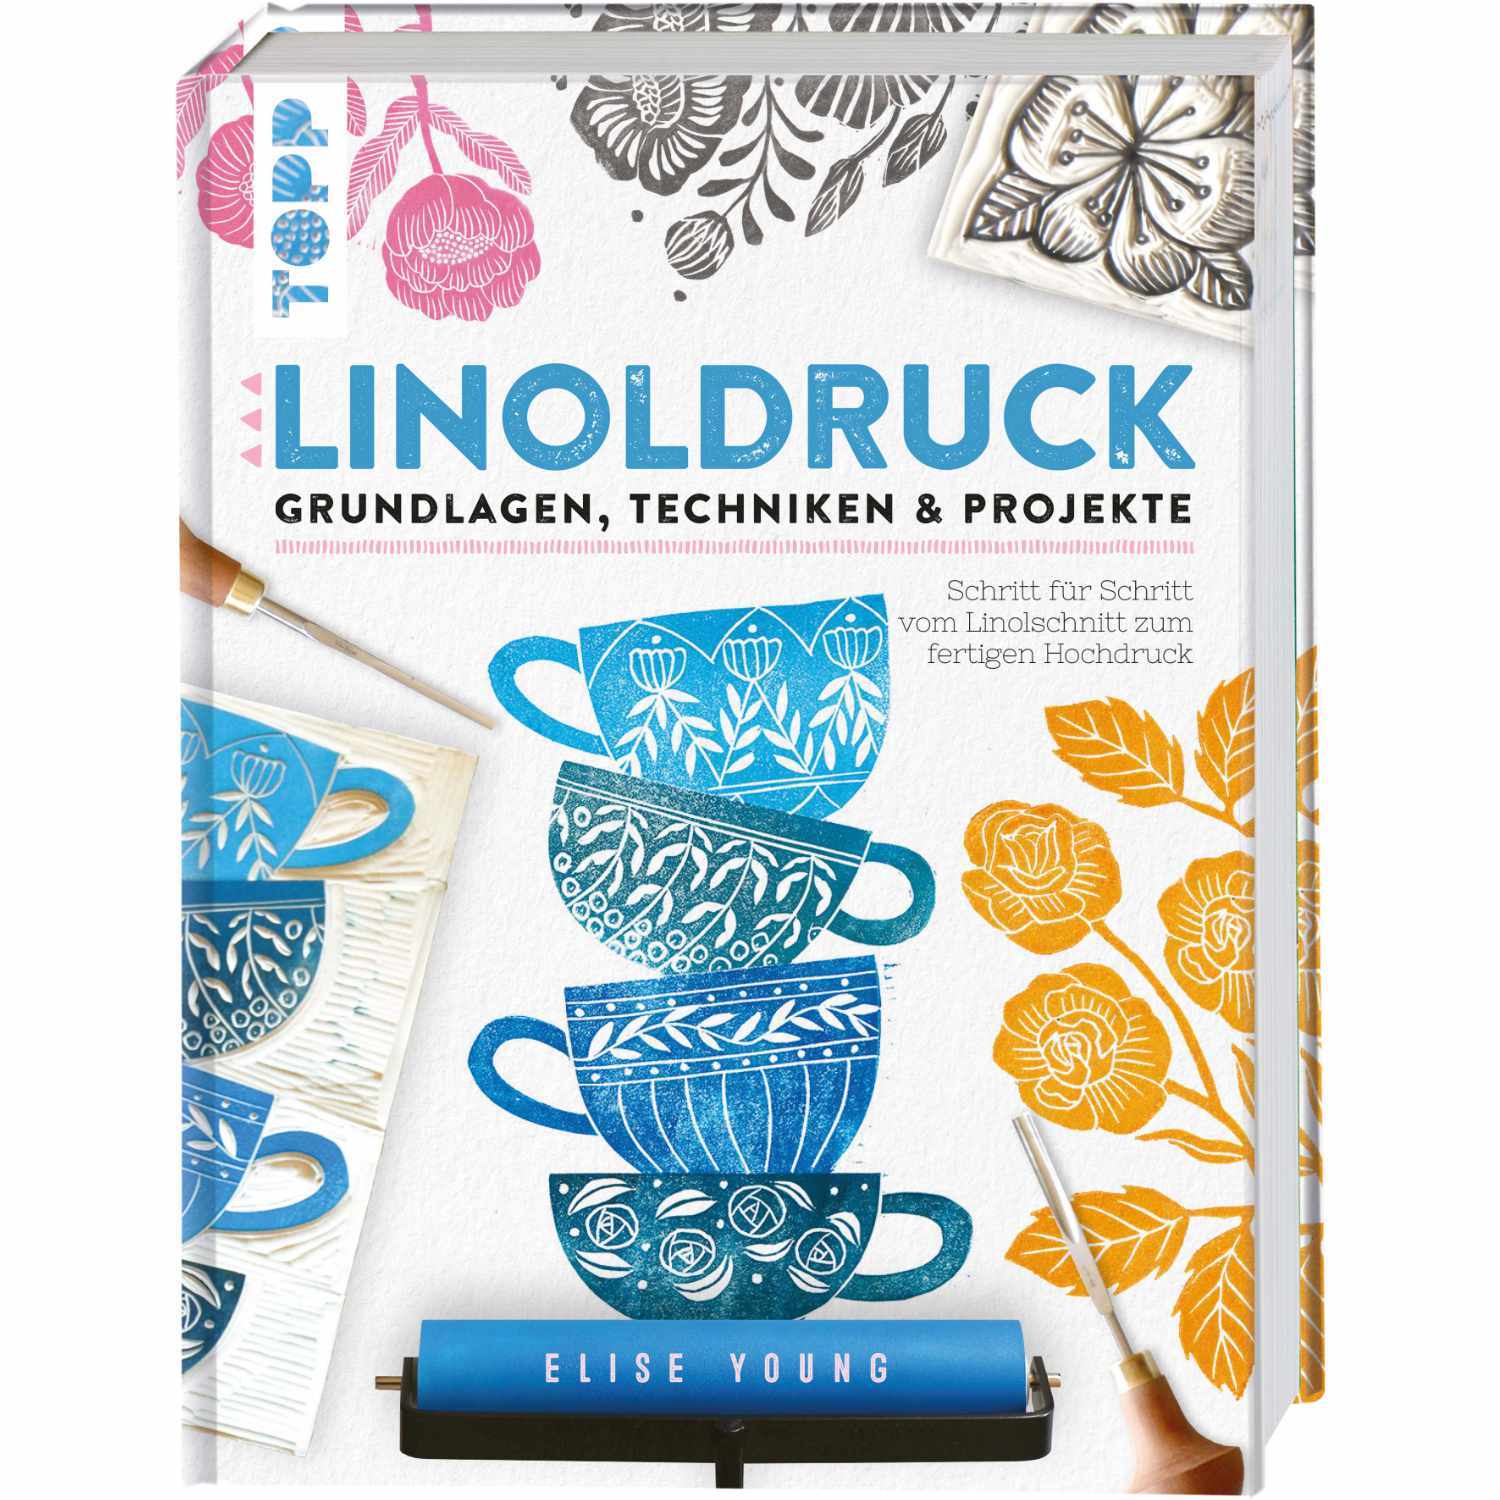 Linoldruck - Grundlagen, Techniken & Projekte